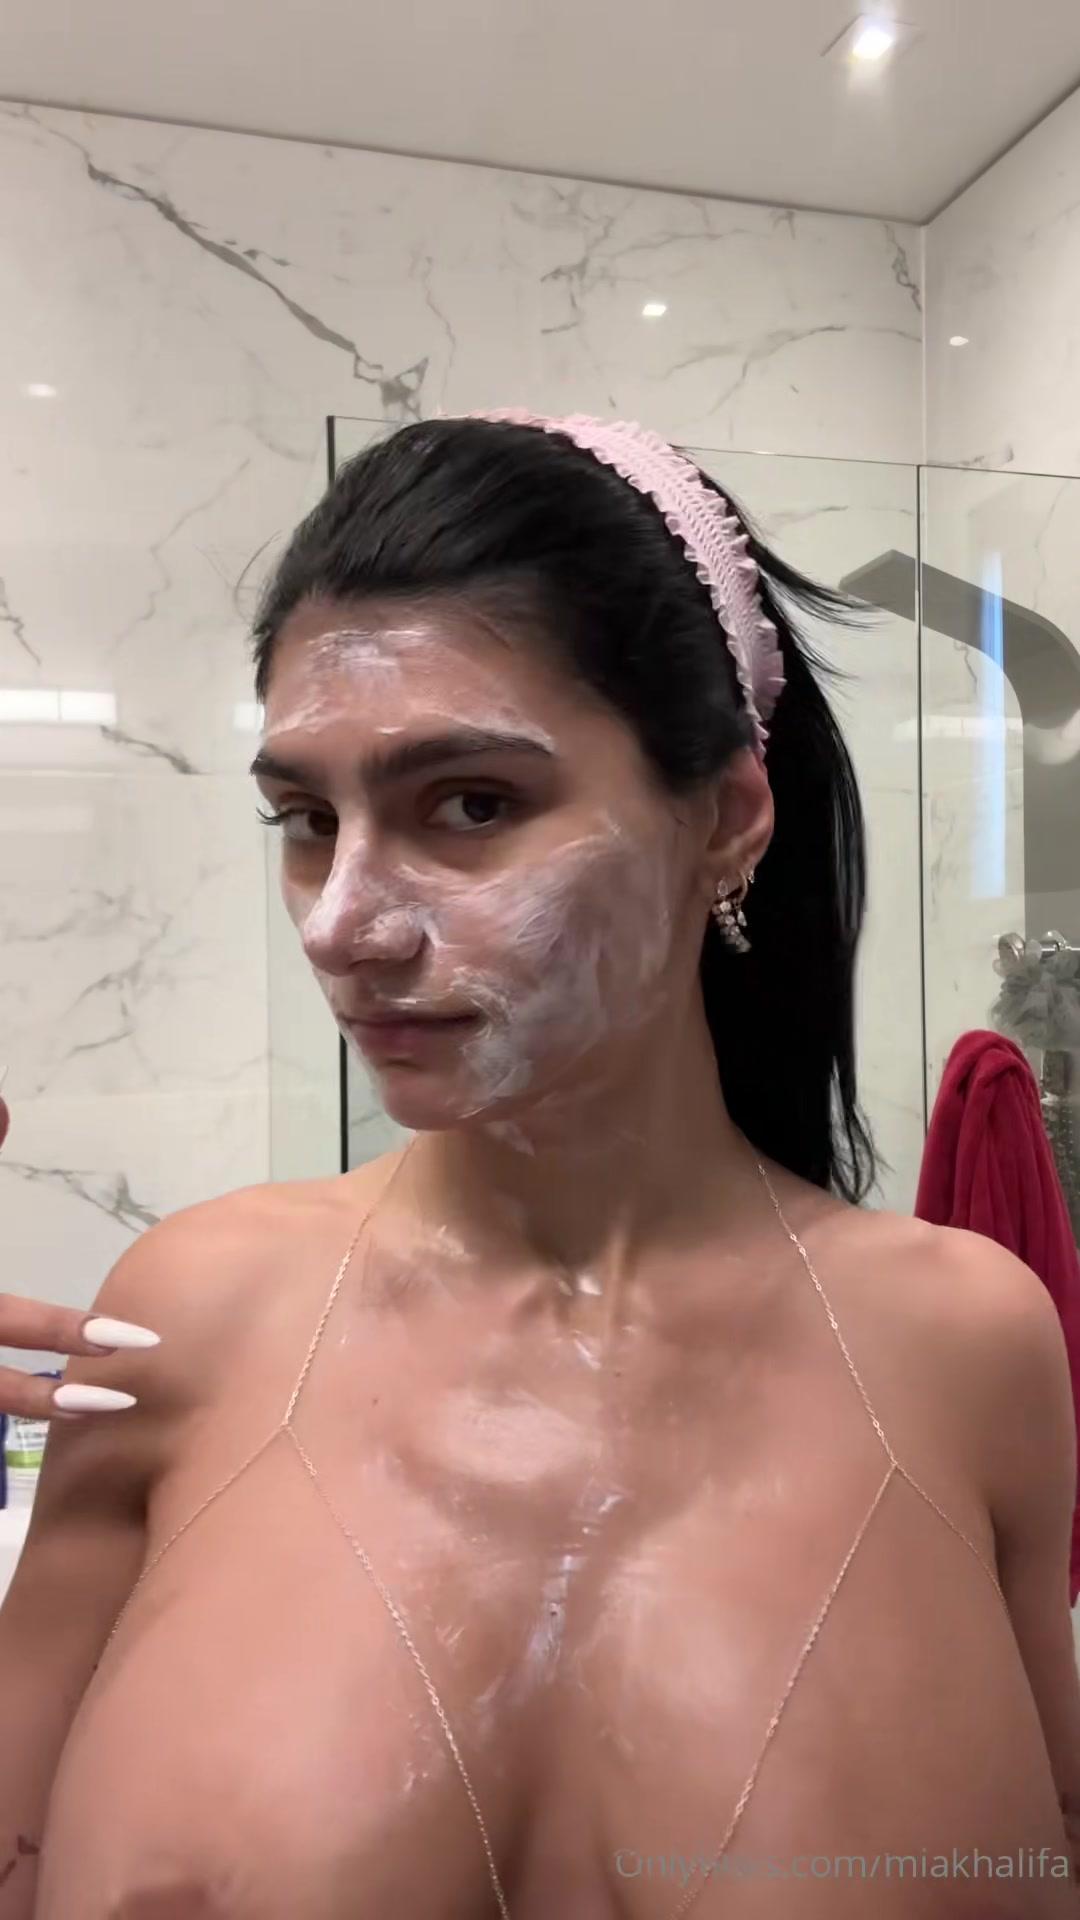 mia khalifa nude shower prep part 2 onlyfans video leaked mhozaf